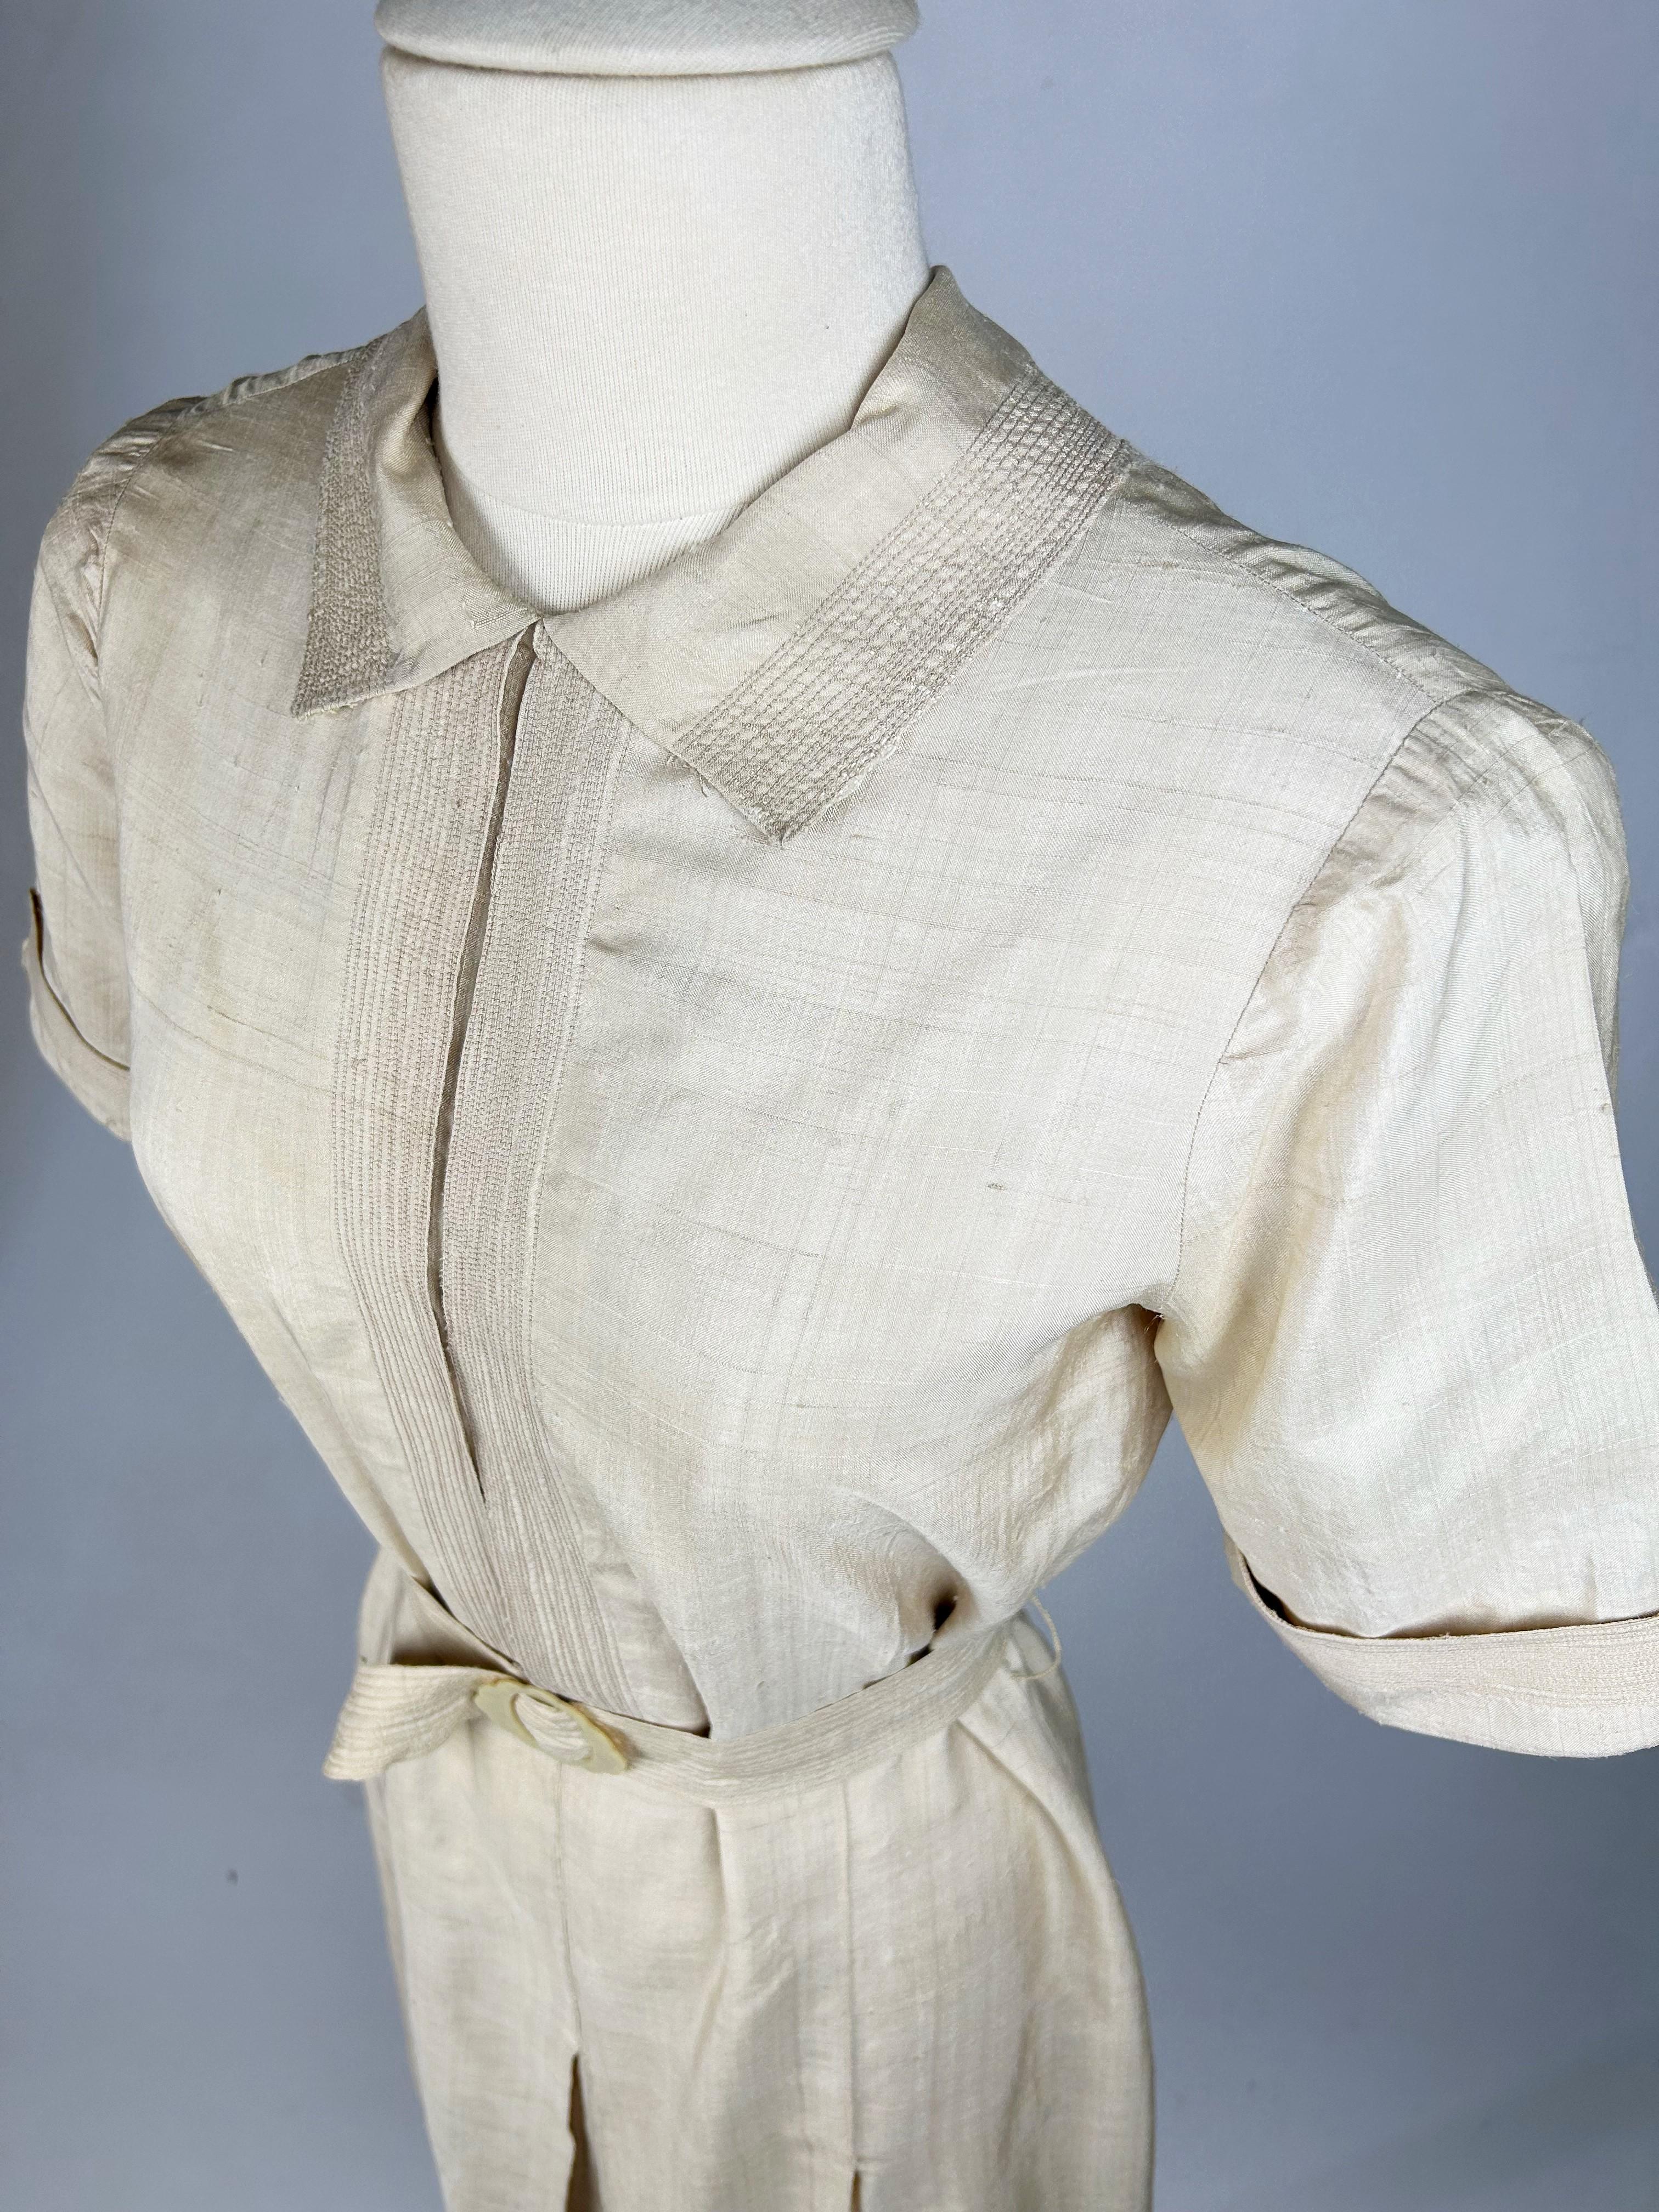 Unbleached wild silk summer dress - France Circa 1930-1940 For Sale 2